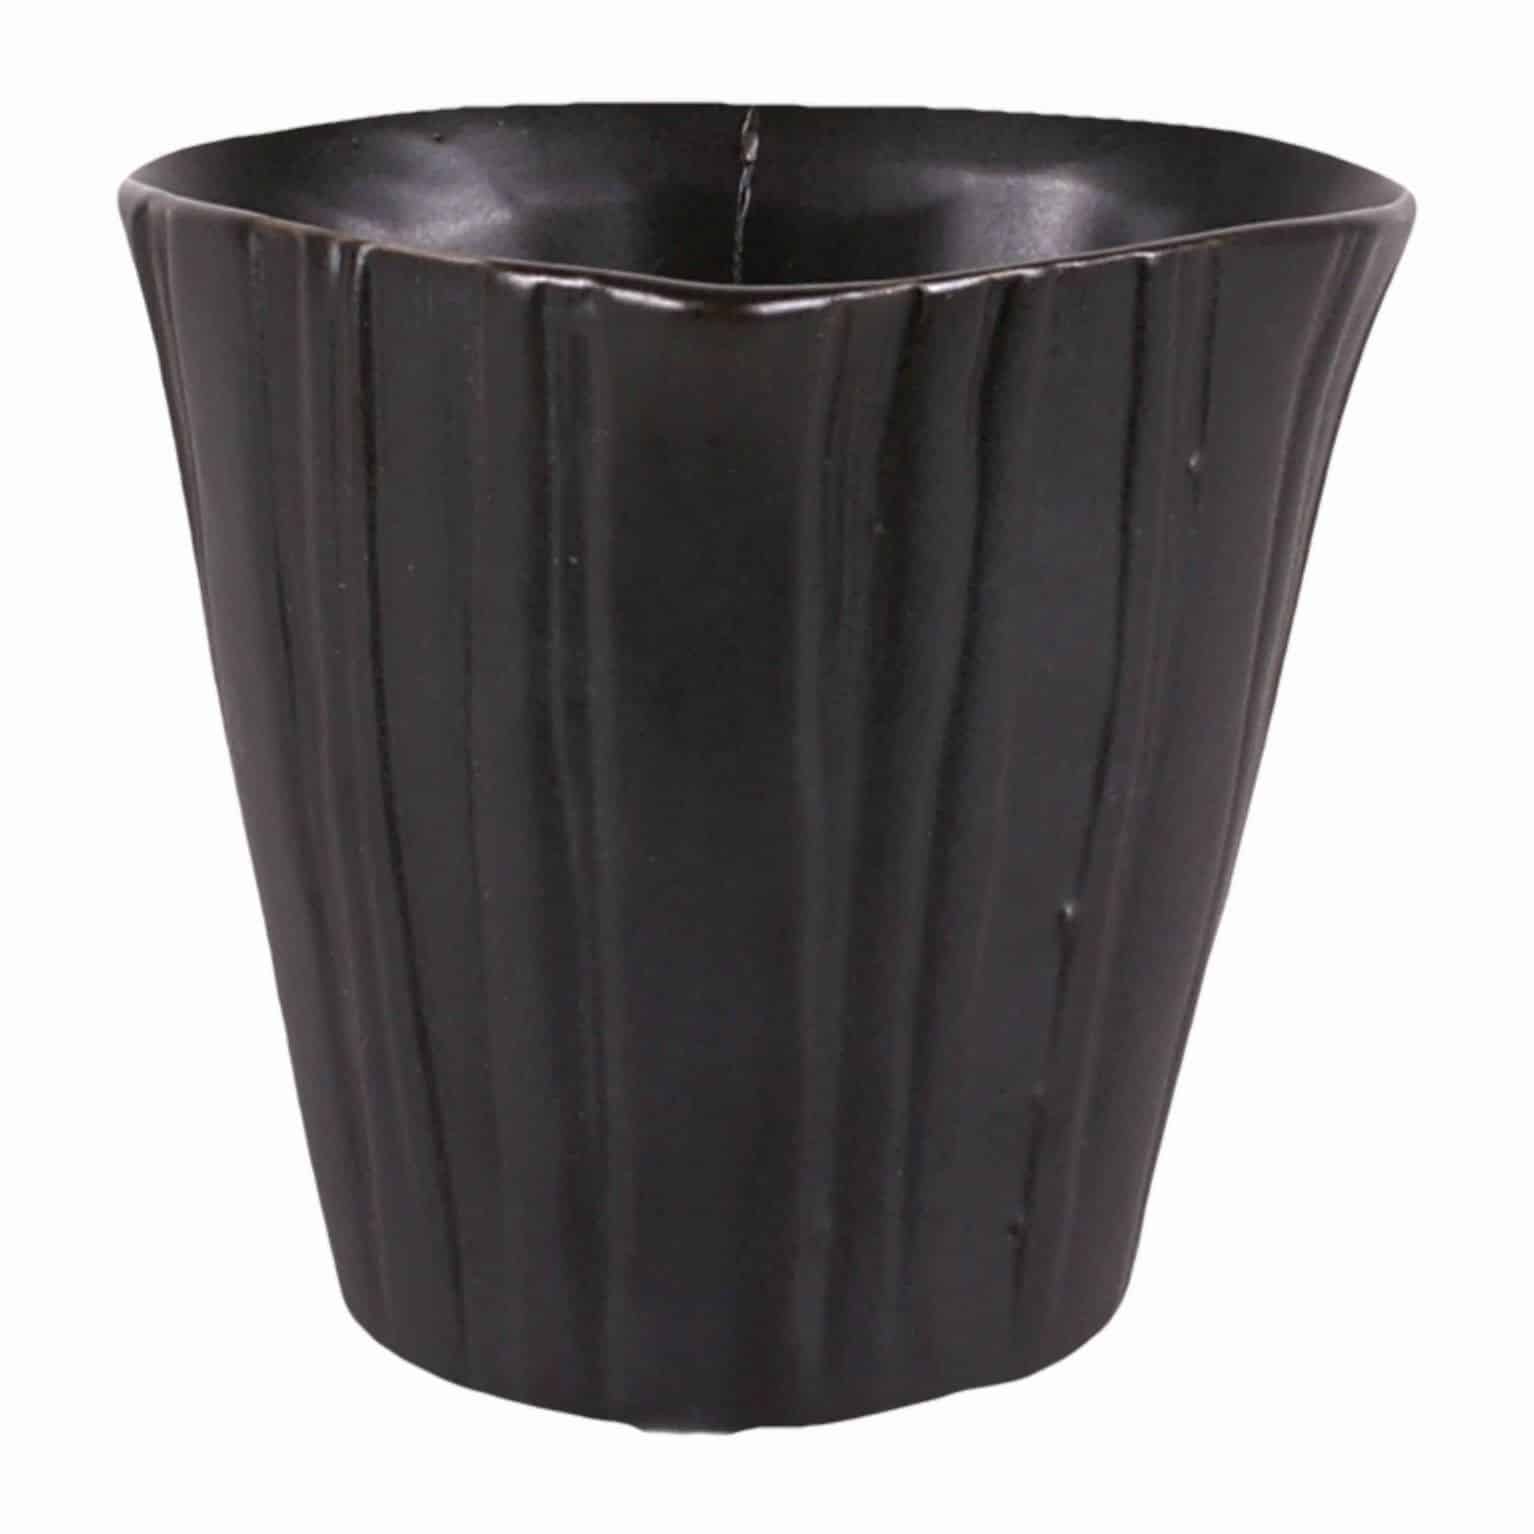 Buy our matt black handmade versatile little plant pot. A favourite for window gardens